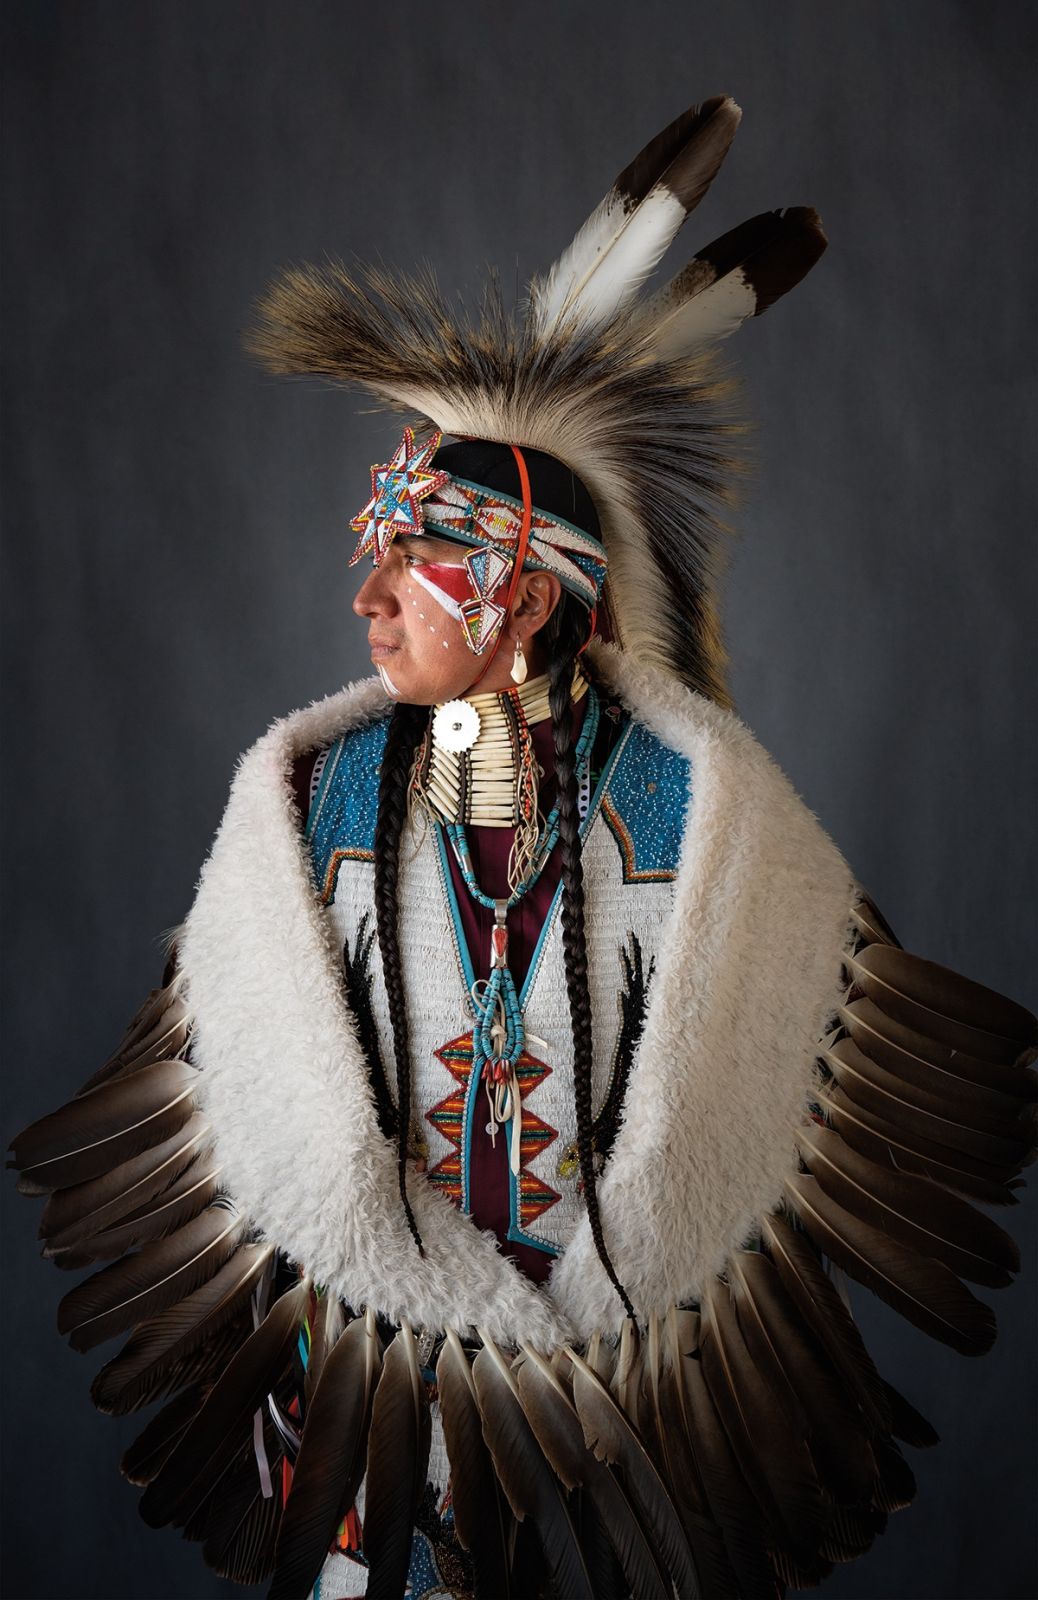 10 beautiful photos native americans by craig varjabedian